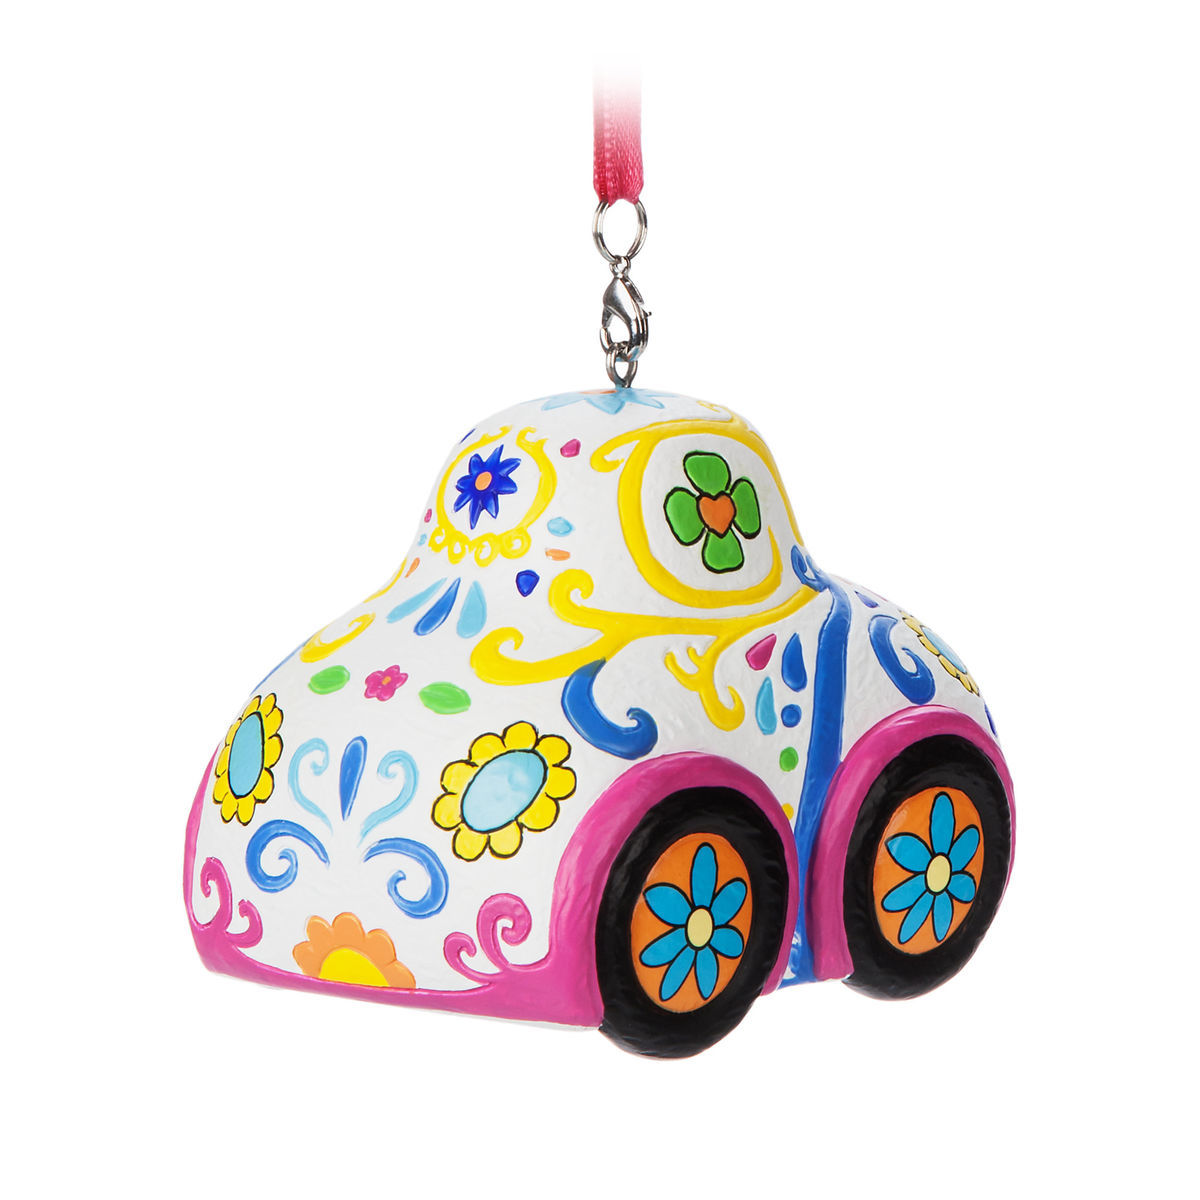 Disney Pixar Cars Dia de los Muertos Resin Christmas Ornament New with Tags